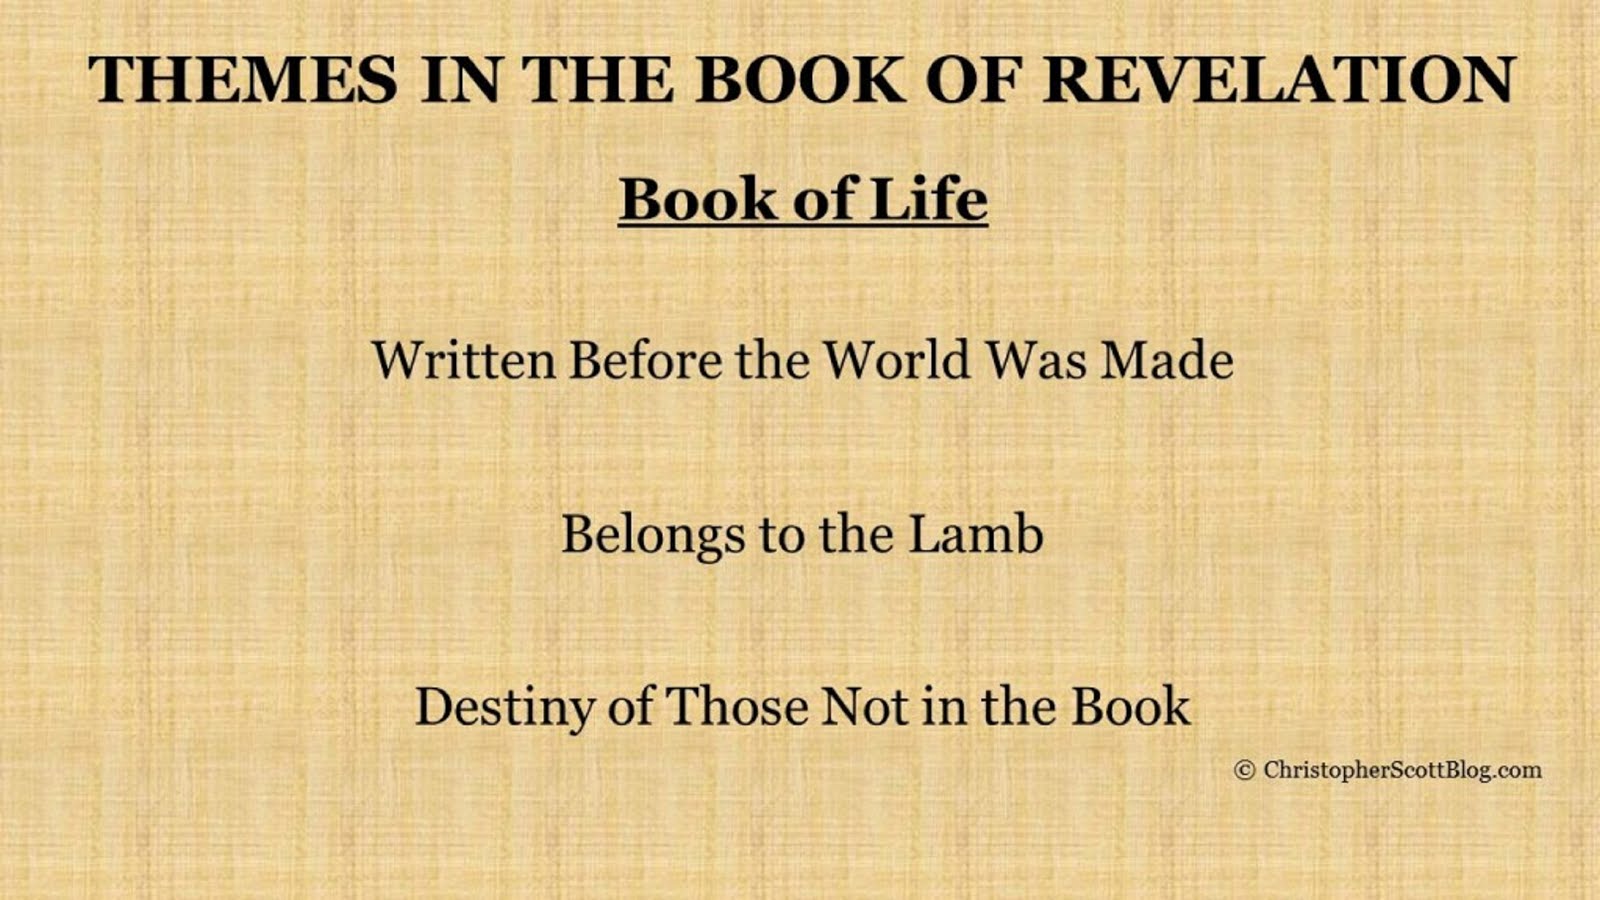 LAMB'S BOK OF LIFE WRITTEN BEFORE THE WORLD